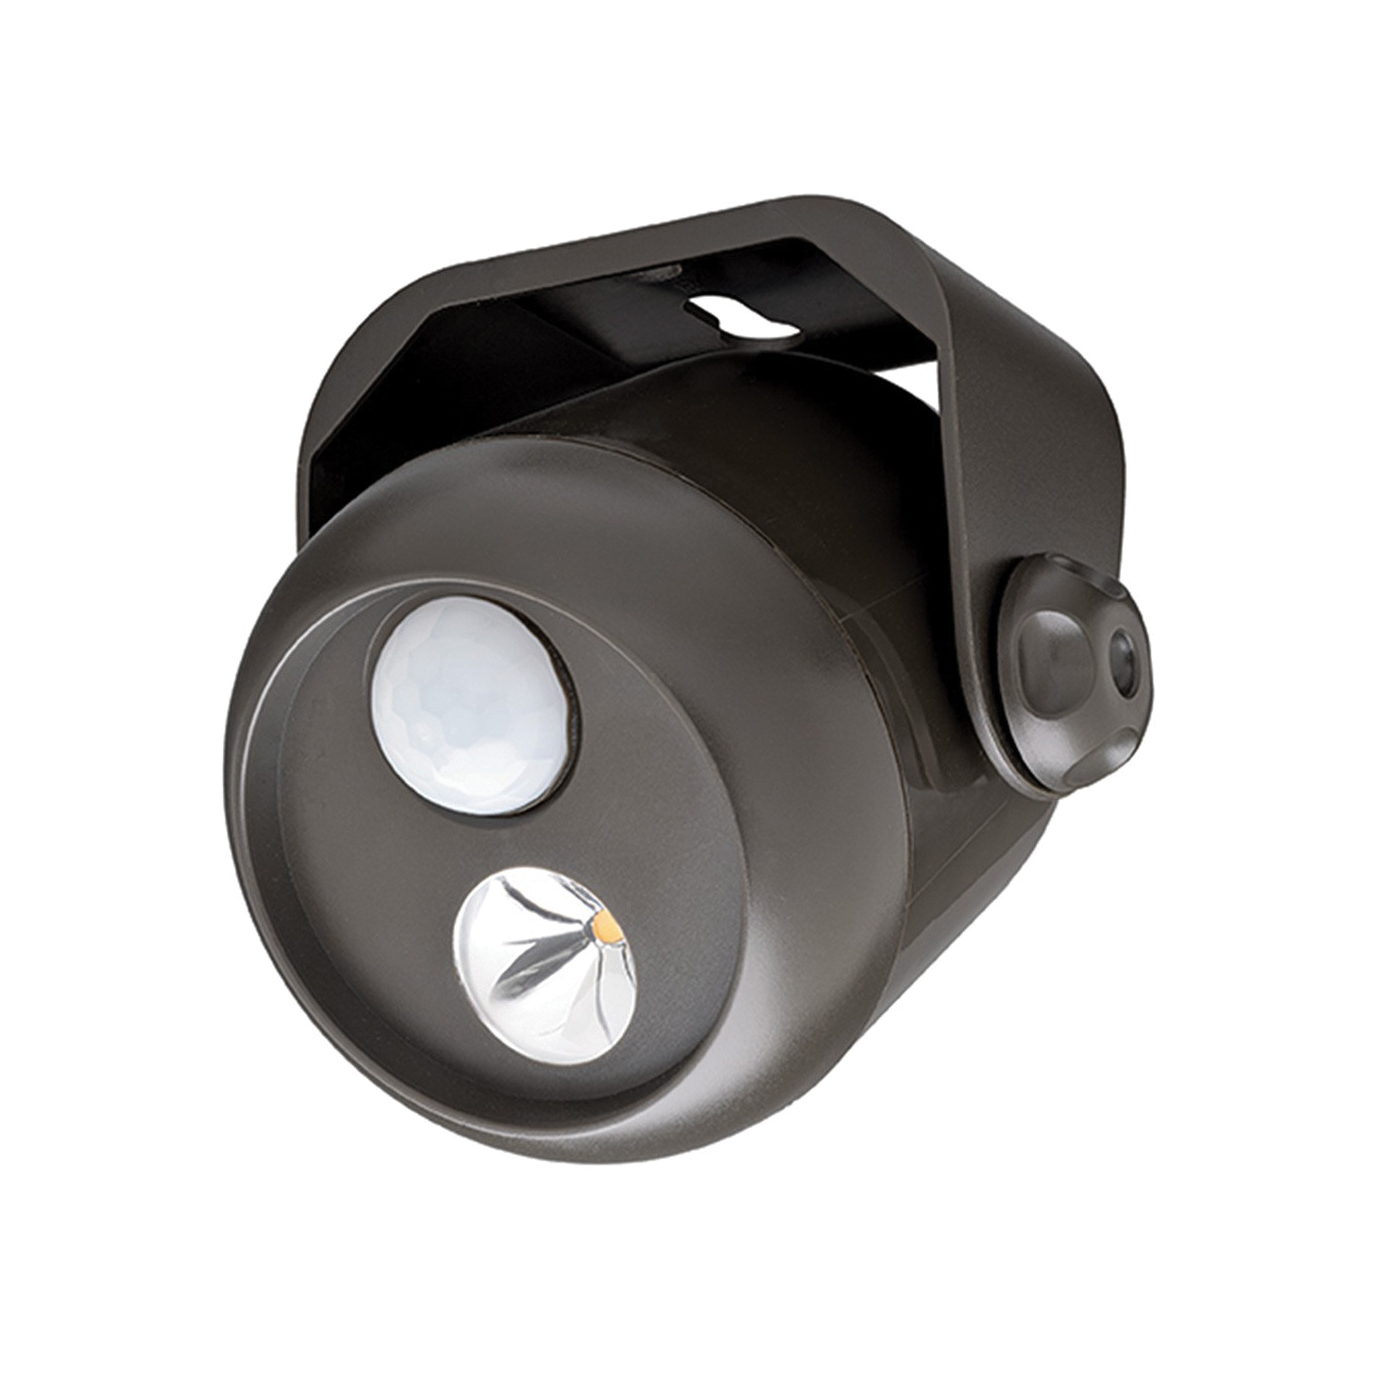 Mr Beams MB310-BRN-01 Mini LED Spotlight, 1-Lamp, LED Lamp, 80 Lumens, Plastic Fixture, Black Fixture - 1